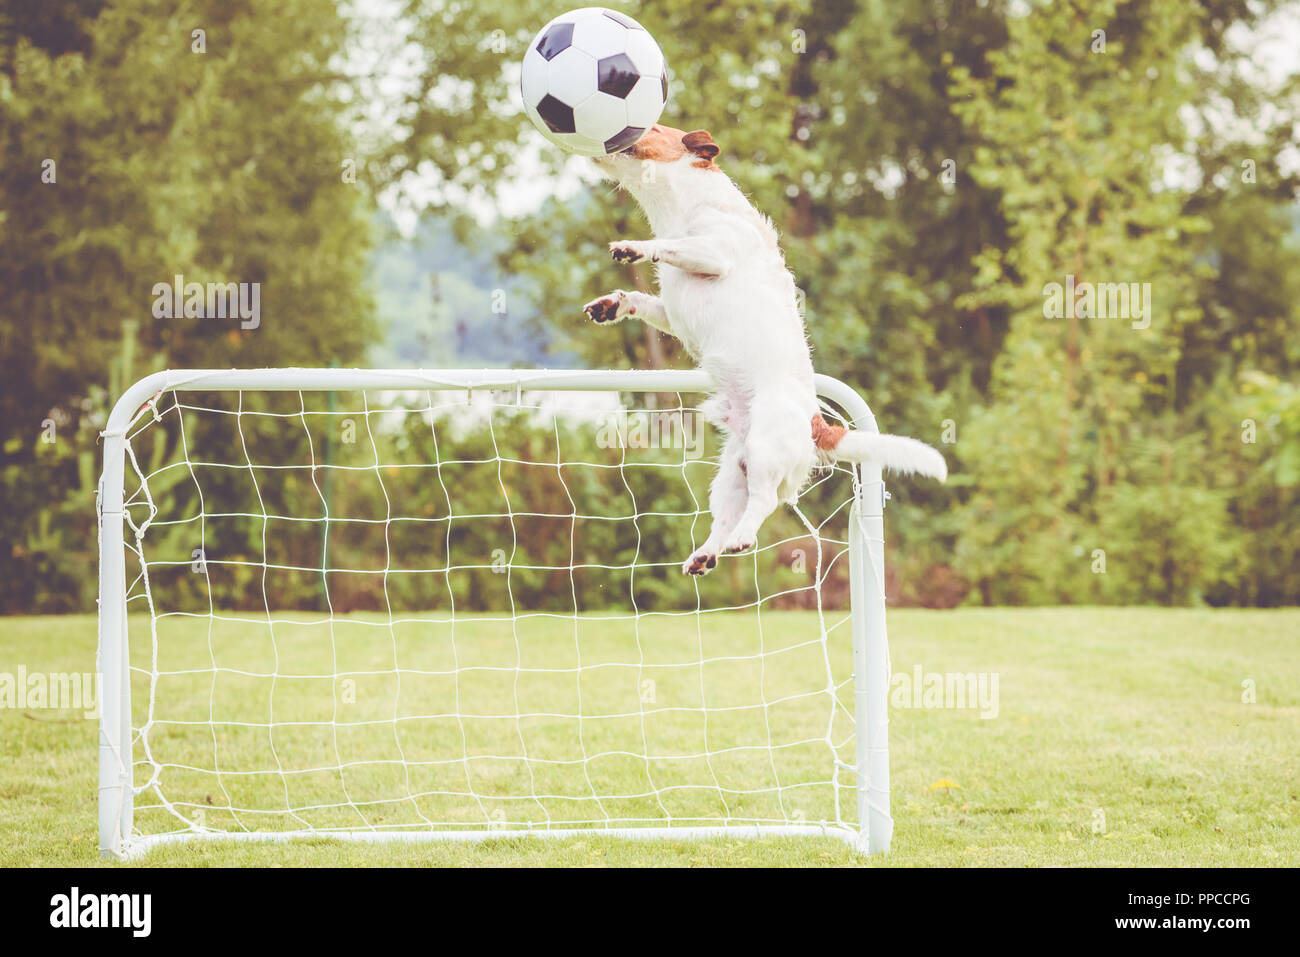 Defender Football Soccer Player Hits Ball With Head Saving Goal Stock Photo Alamy